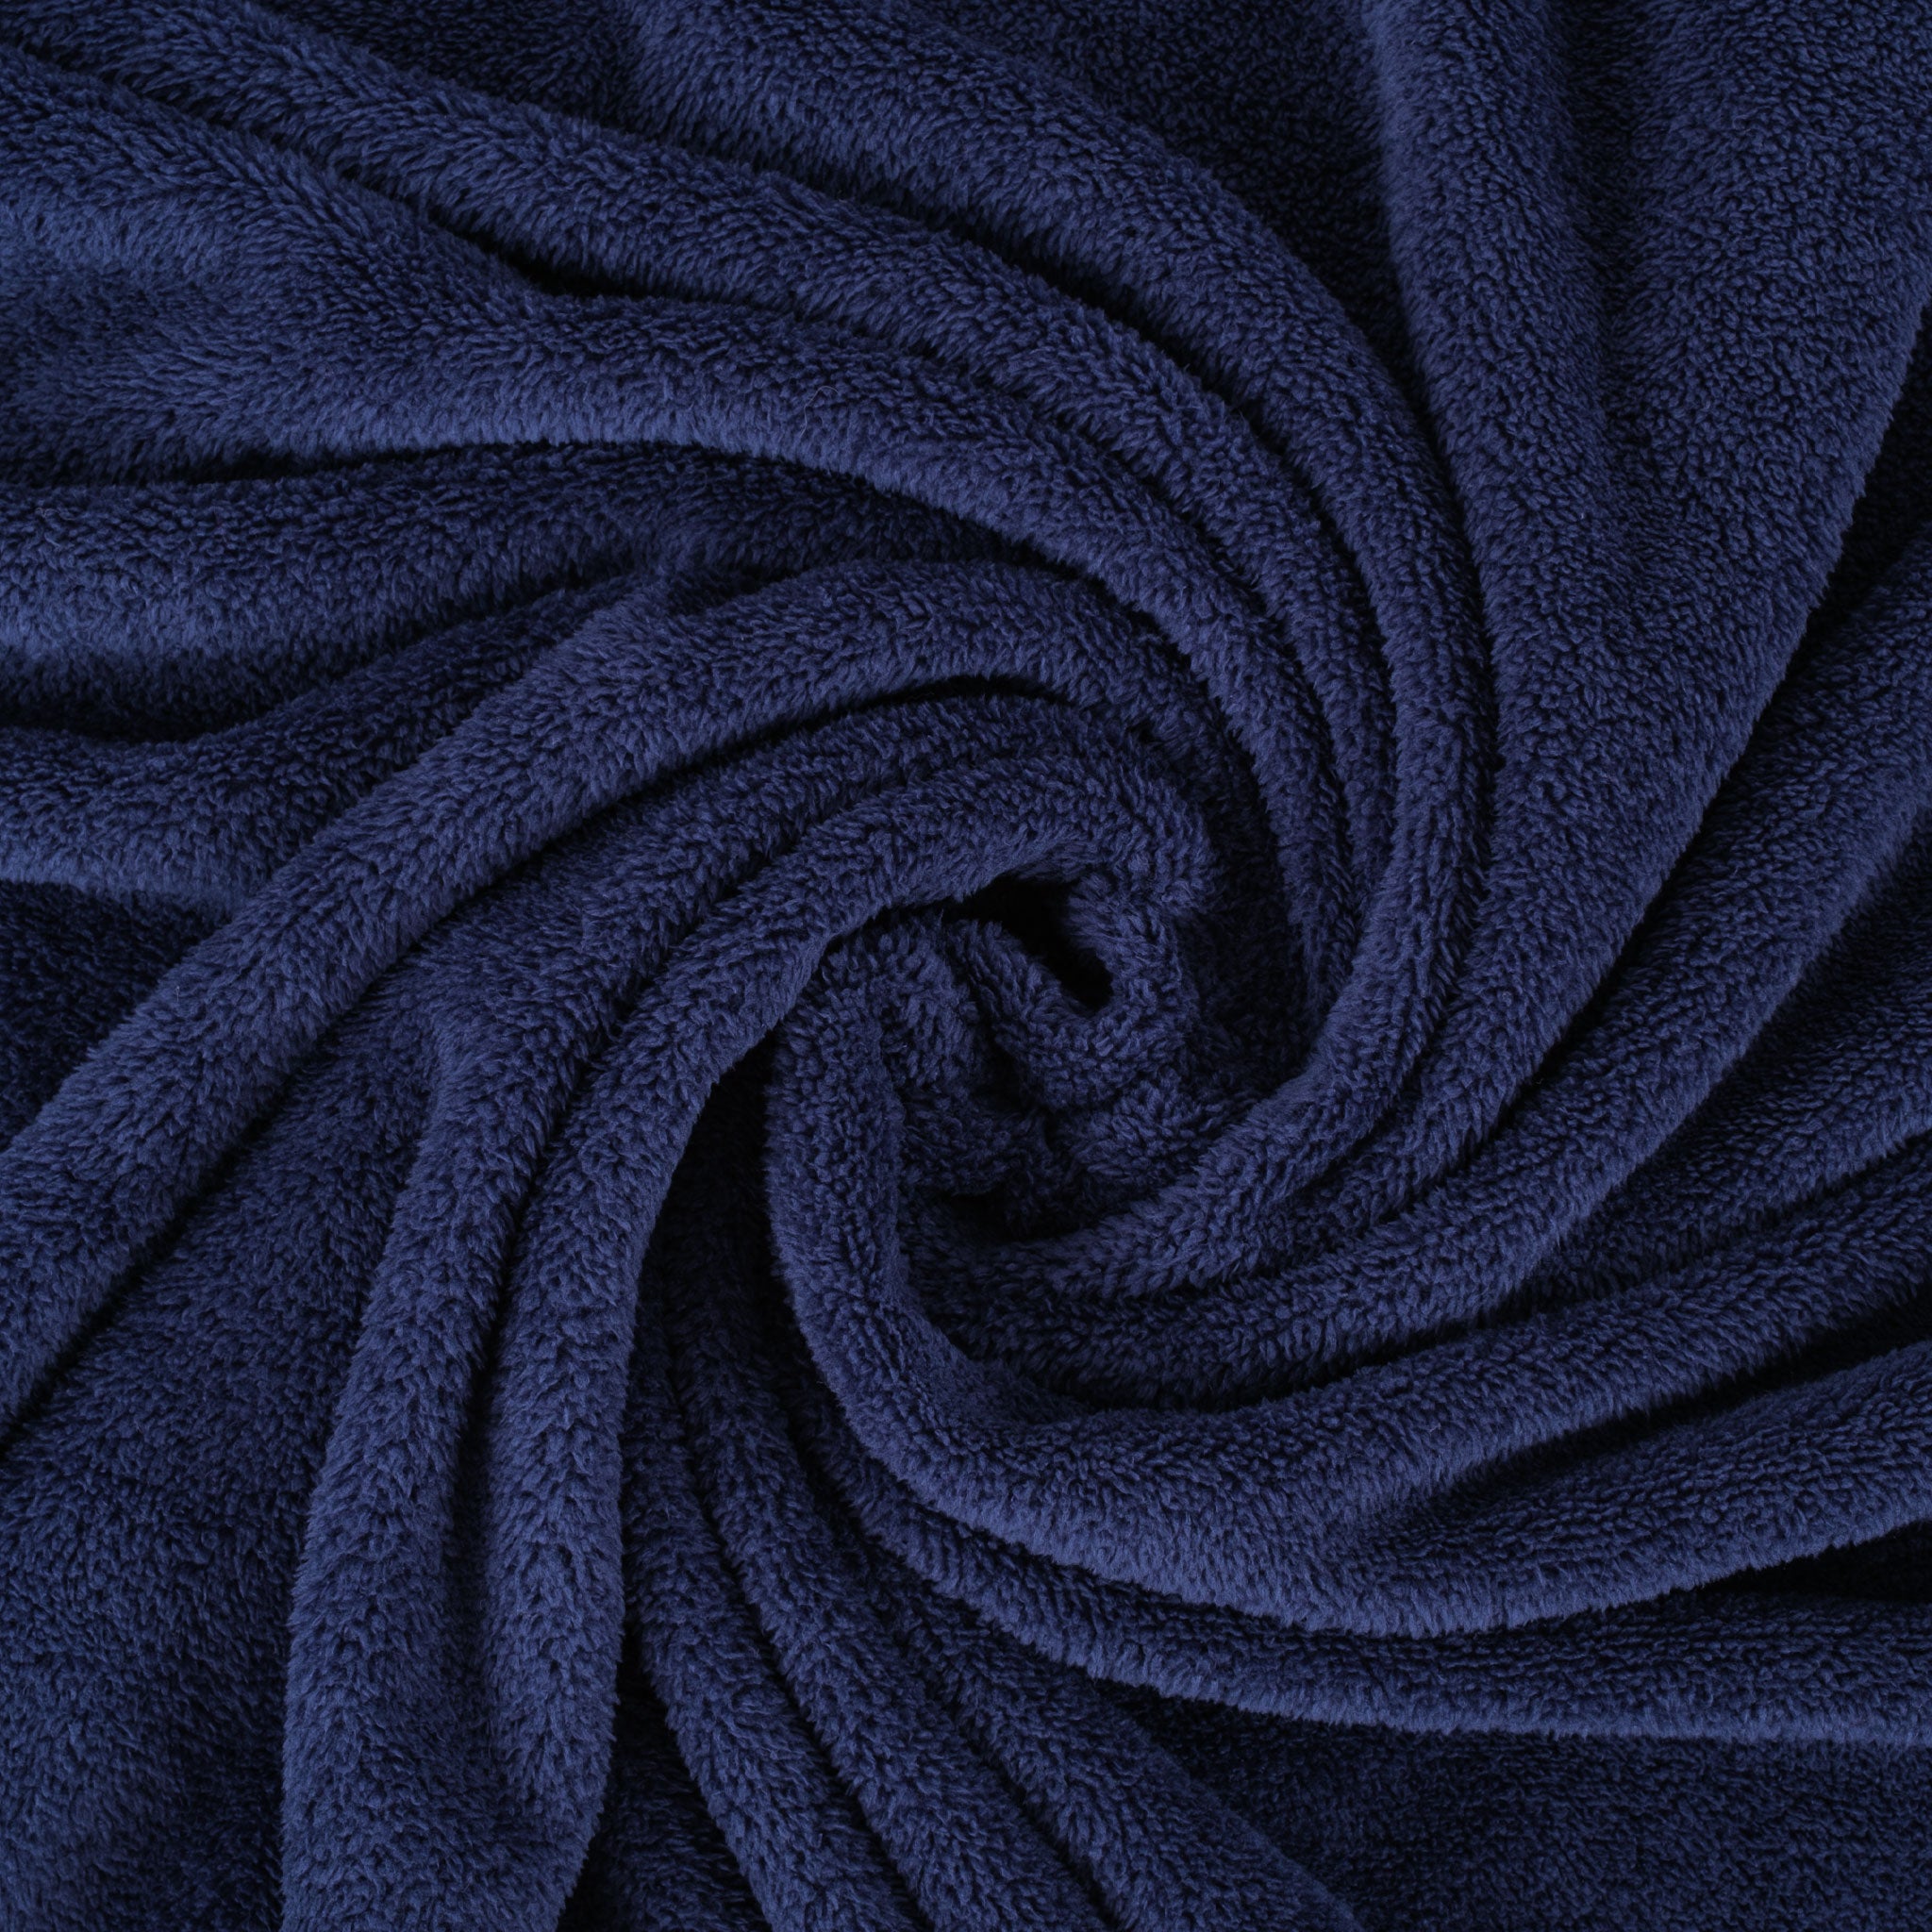 American Soft Linen - Bedding Fleece Blanket - Wholesale - 9 Set Case Pack - Queen Size 85x90 inches - Navy-Blue - 5